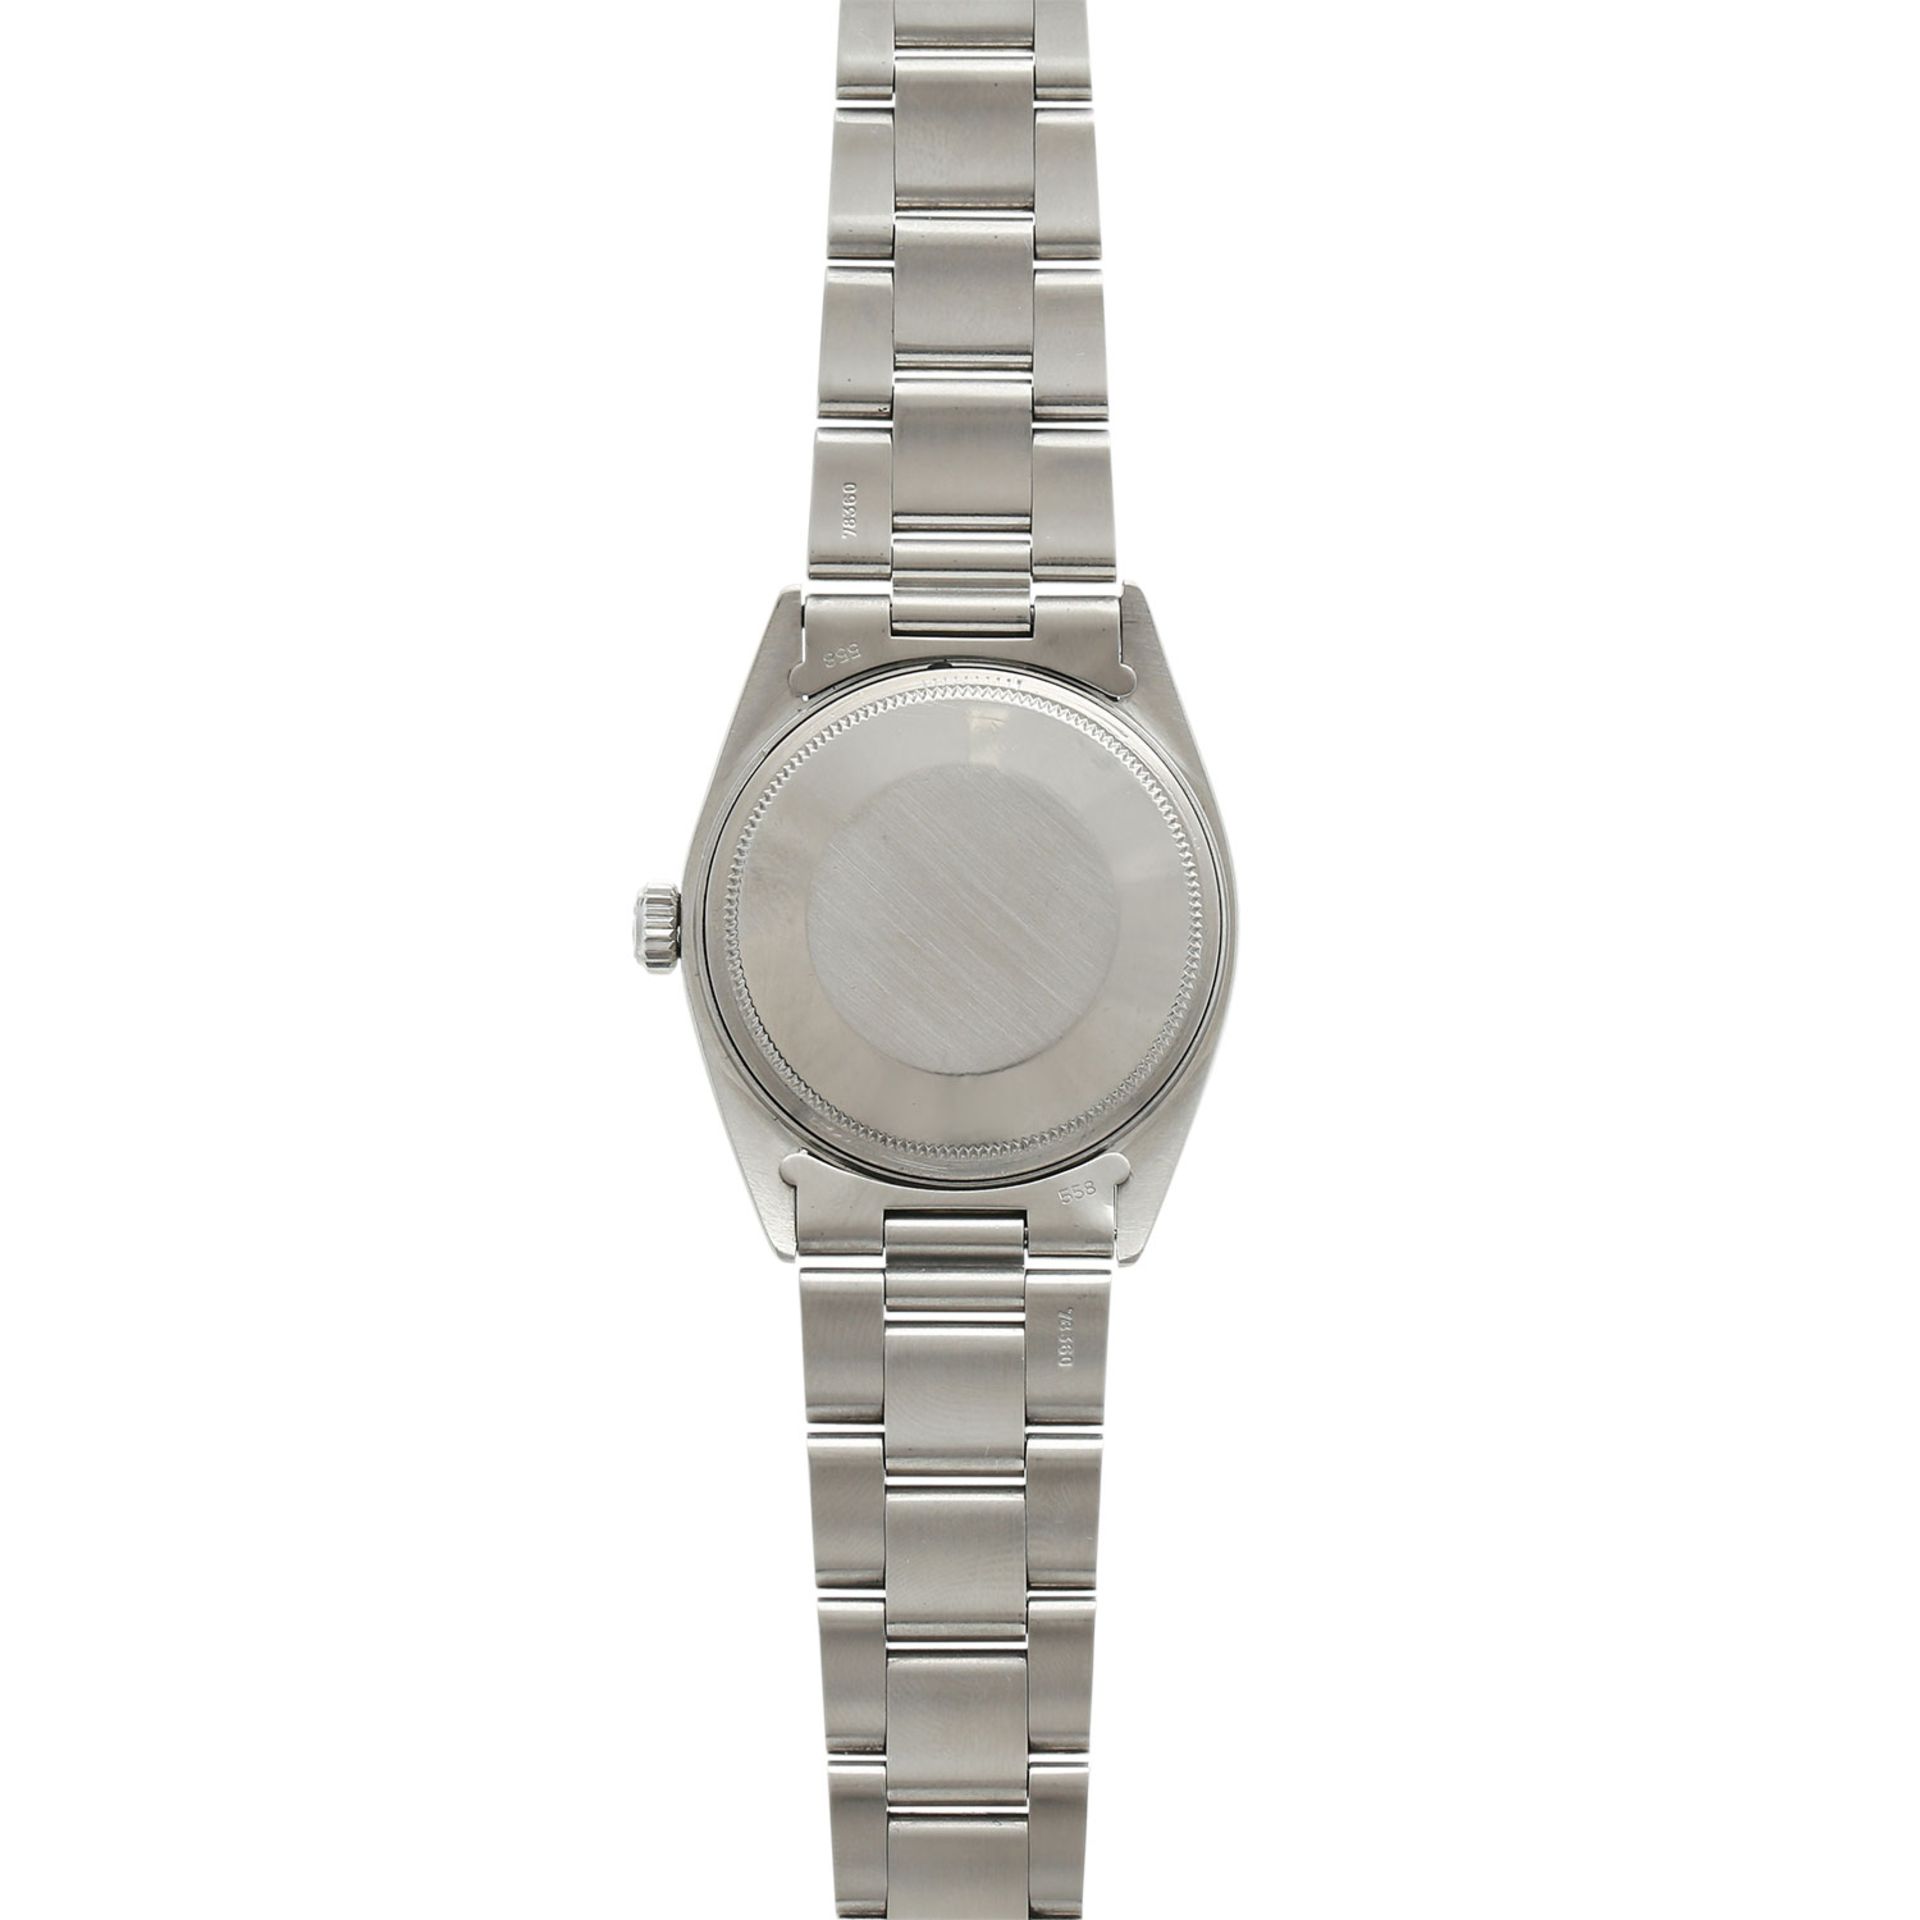 ROLEX Oyster Perpetual Datejust White Dial Armbanduhr, Ref. 1600, ca. 1970/80er Jahre.Edelstahl. - Bild 2 aus 5